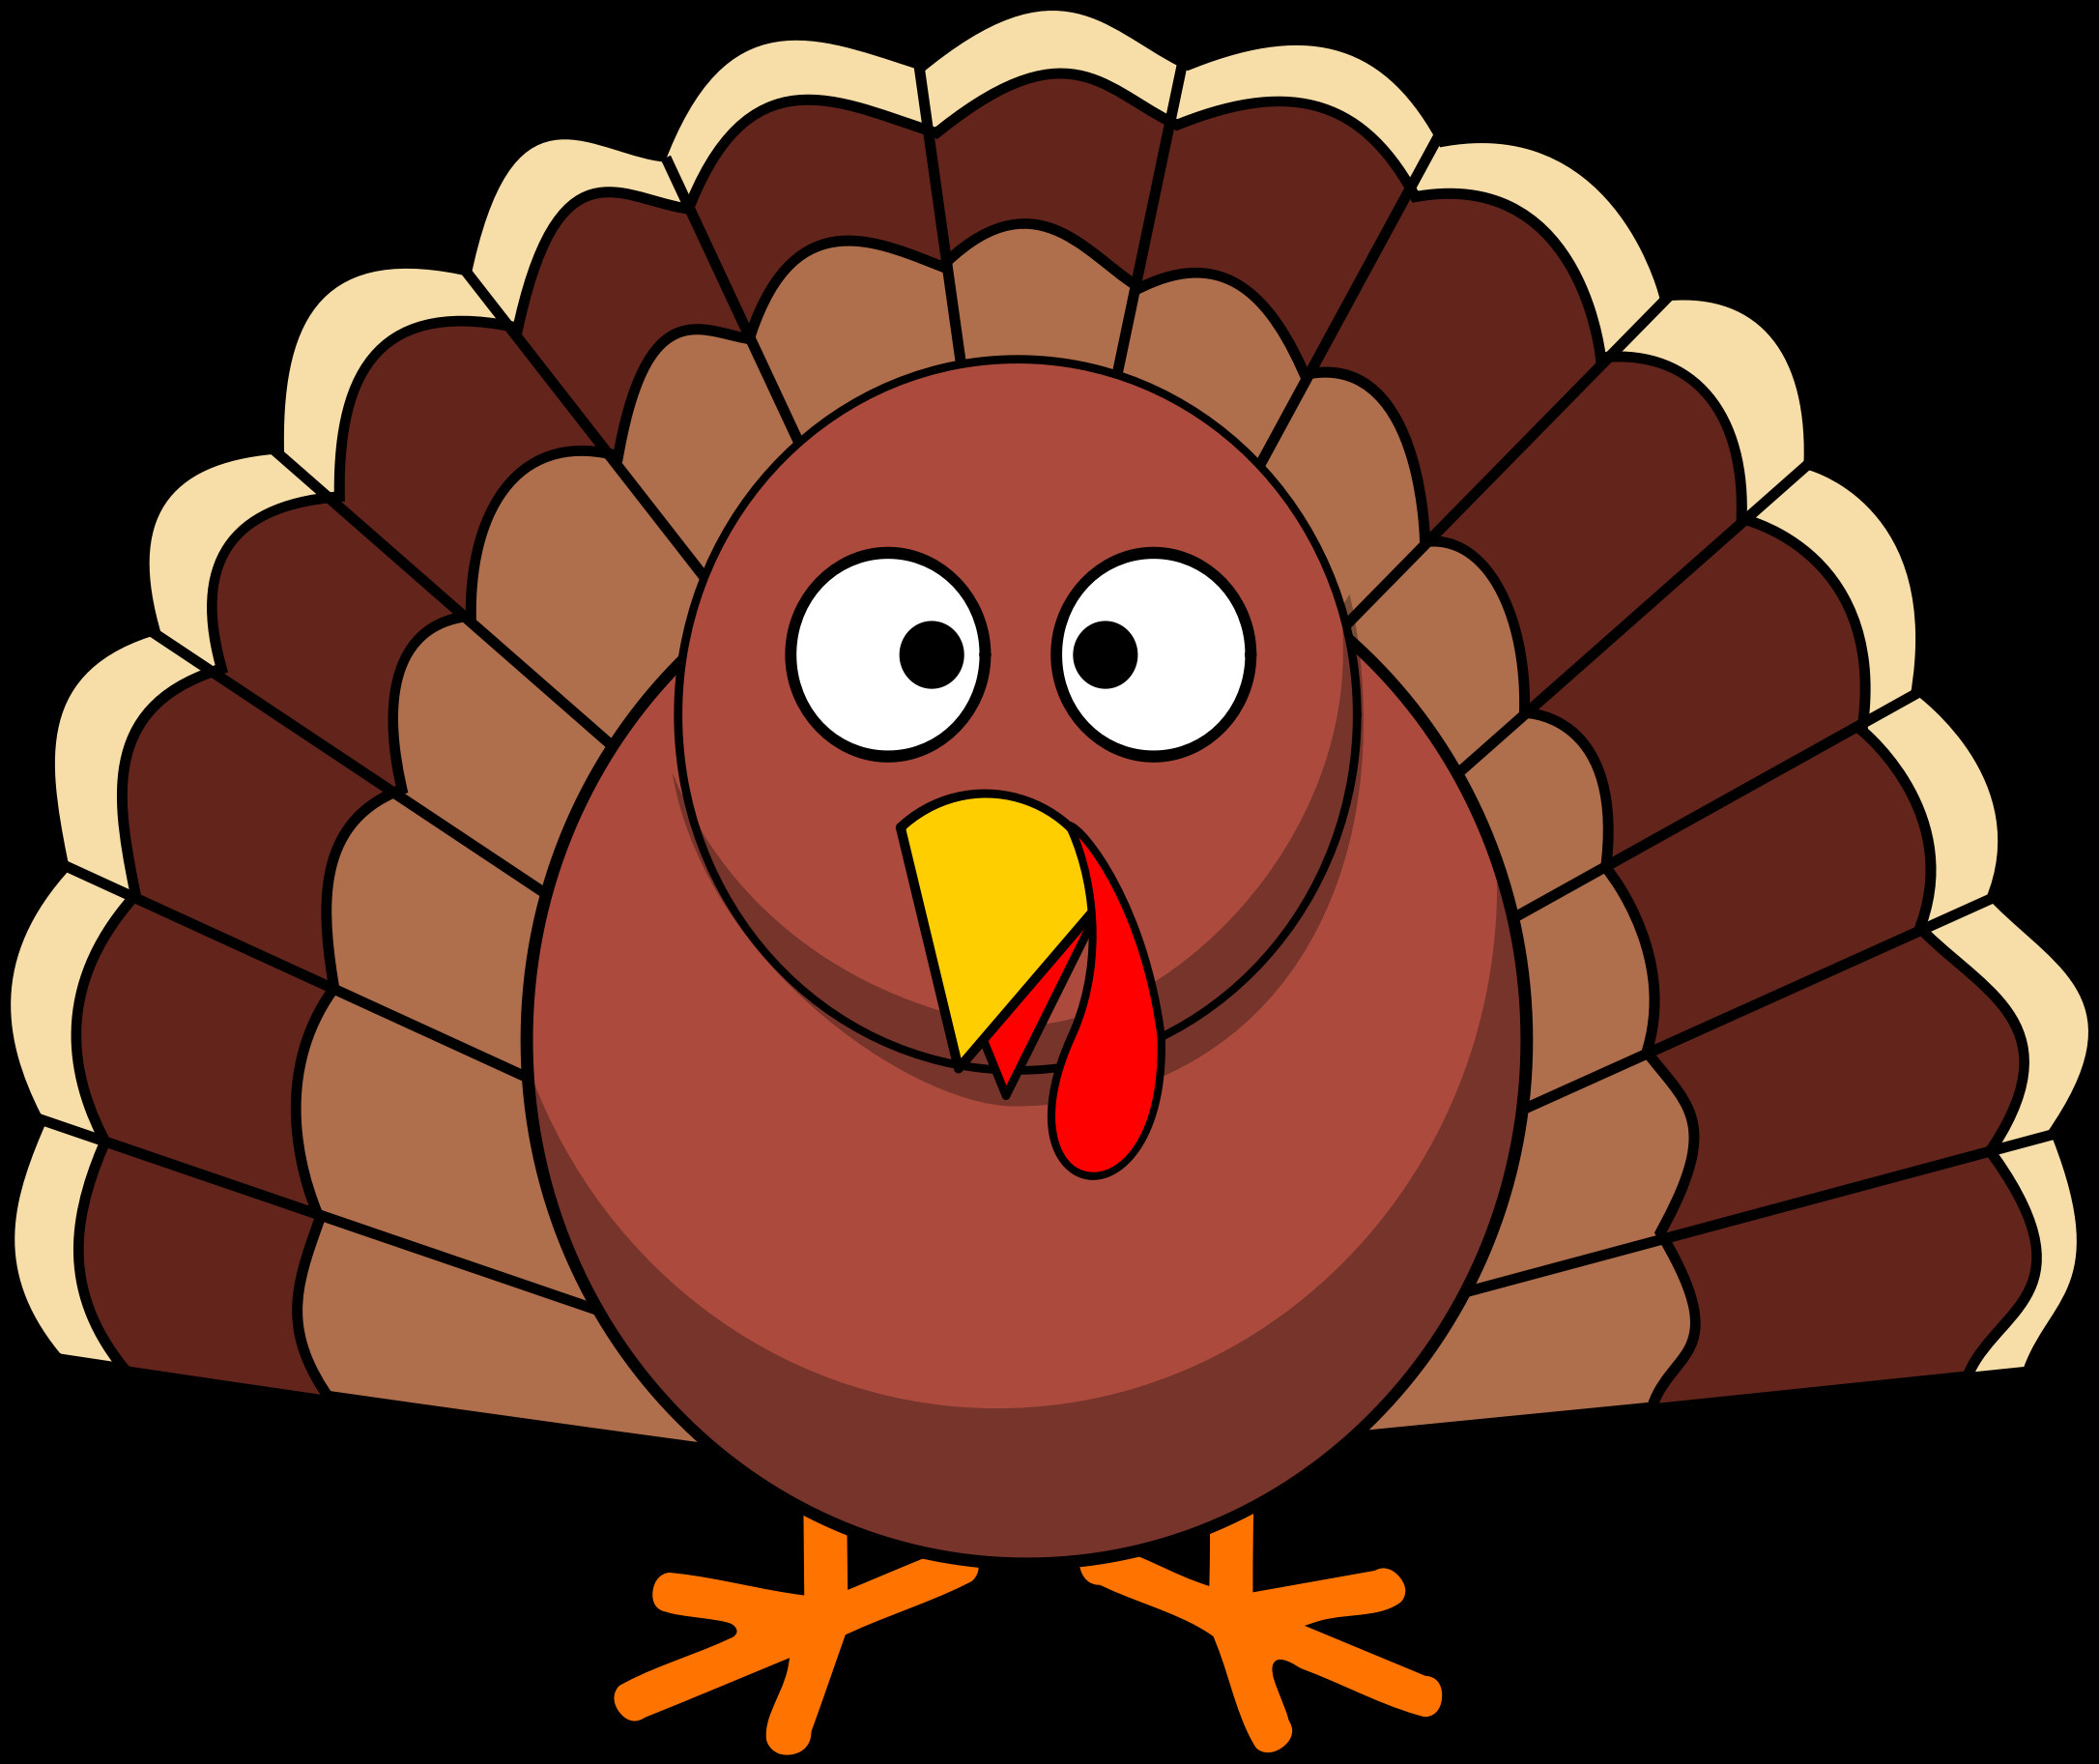 Thanksgiving Cartoon Turkey
 Cartoon Turkey Clipart Clipart Suggest